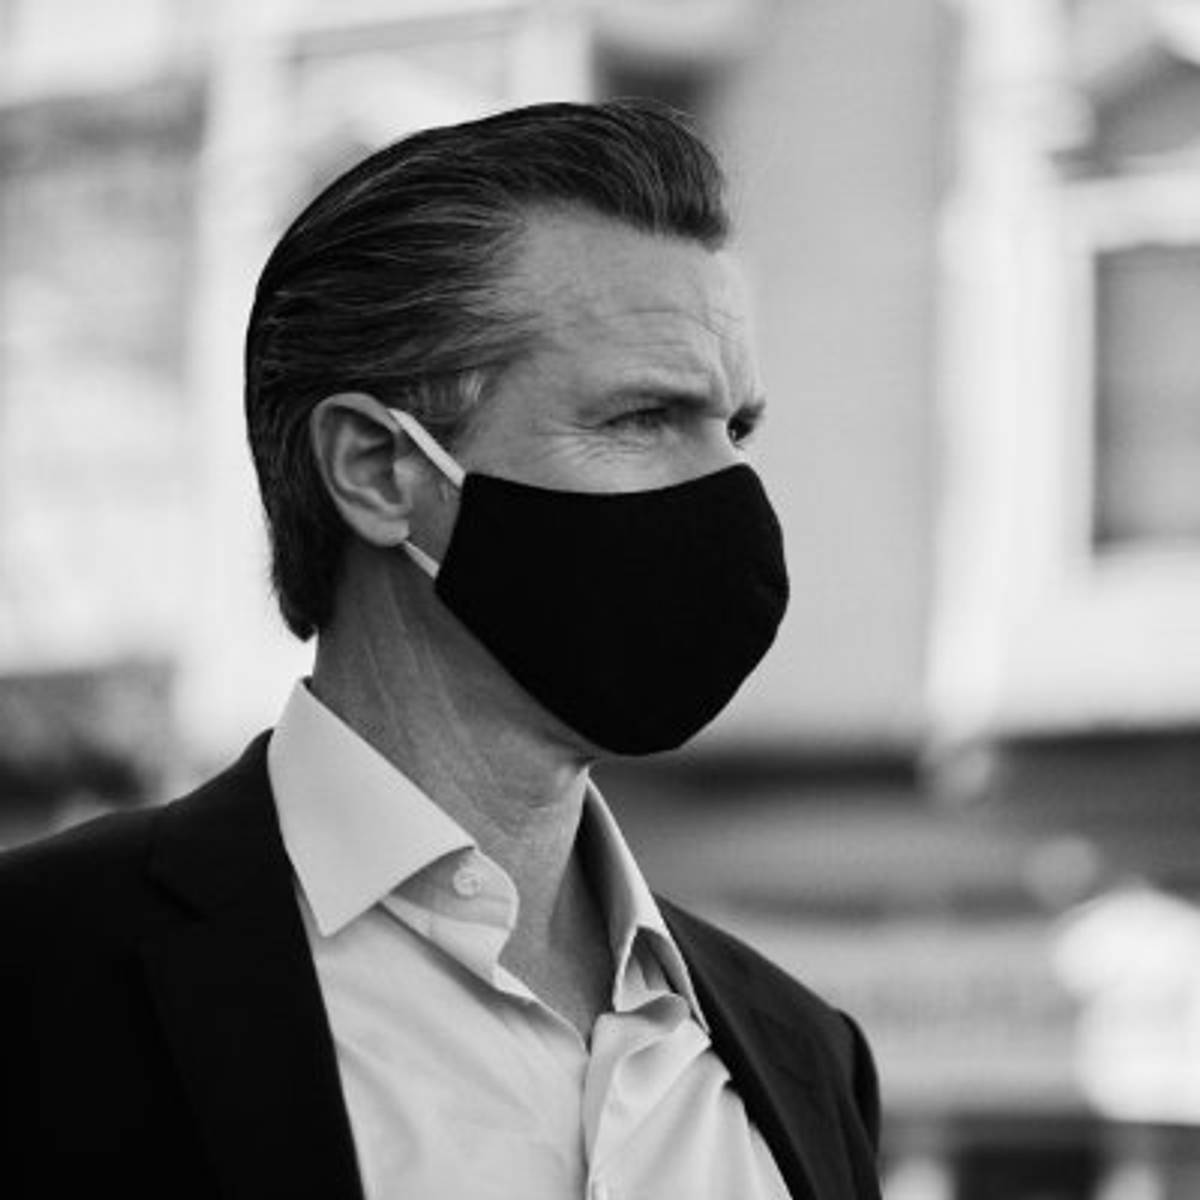 California Governor Gavin Newsom criticized again for not wearing a mask